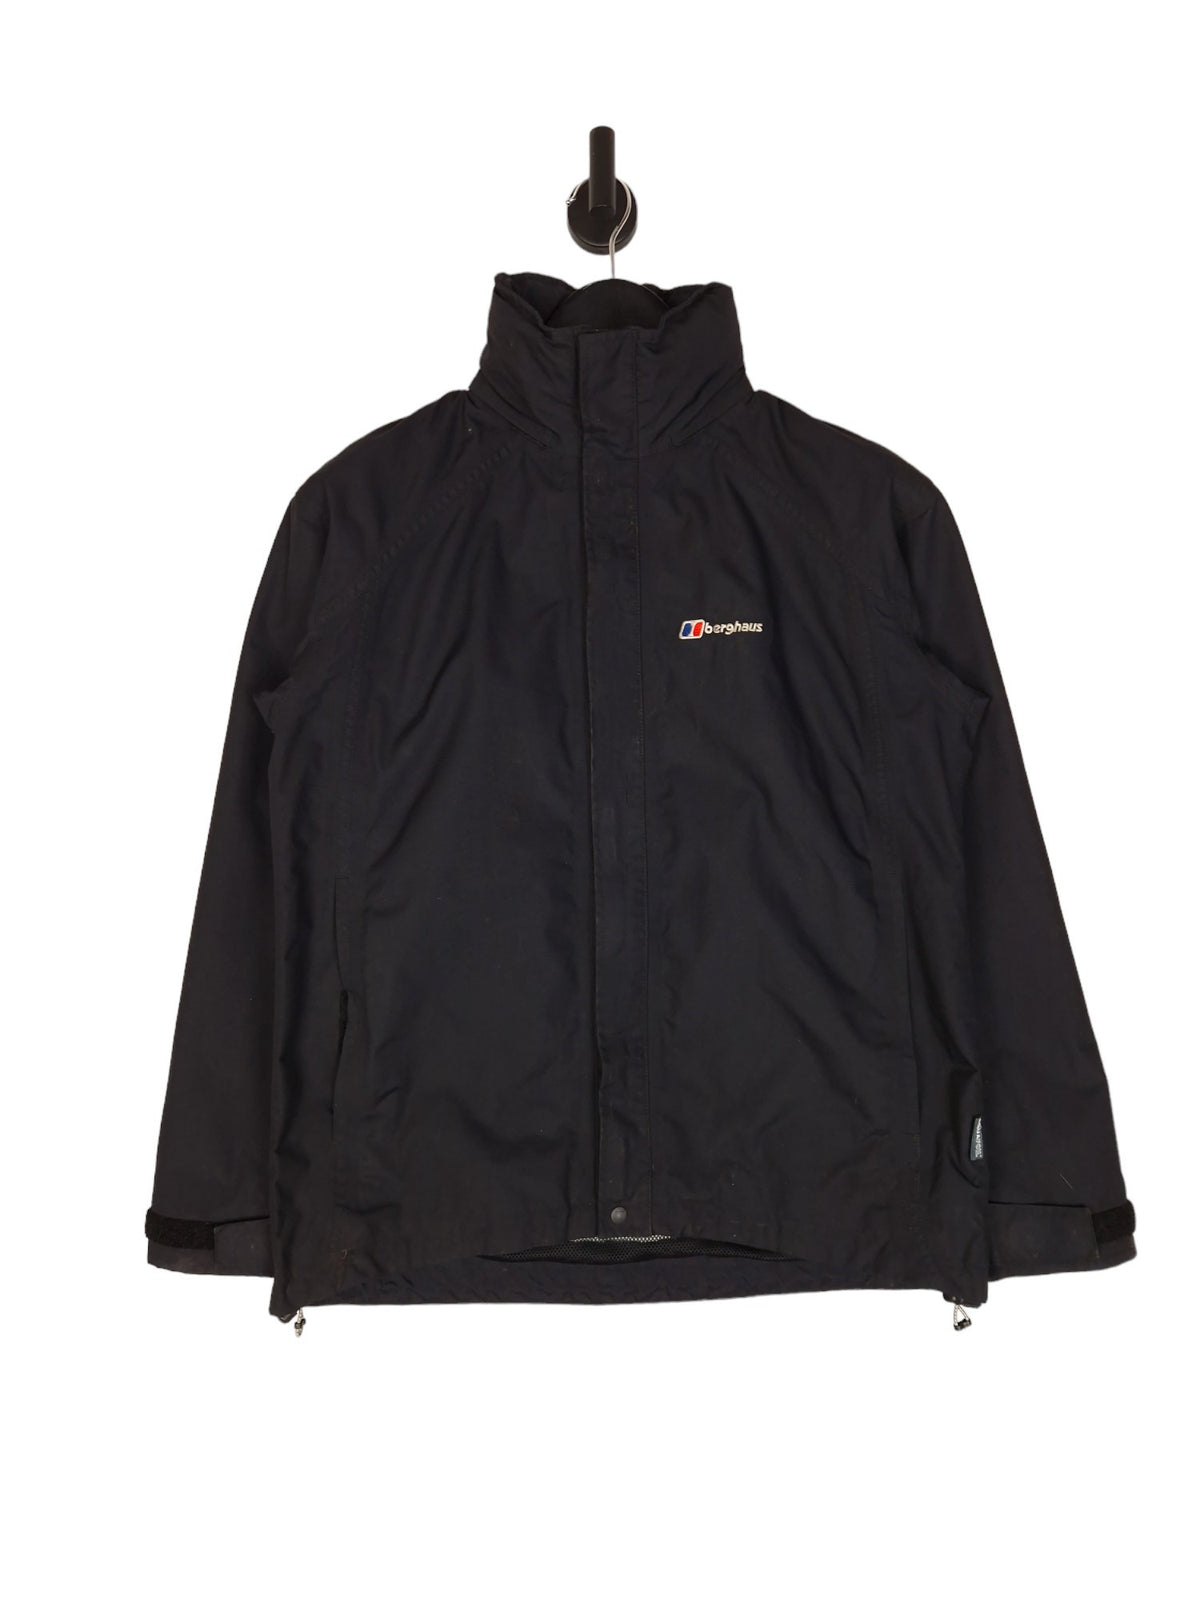 Berghaus Aquafoil Rain Jacket - Size UK 12